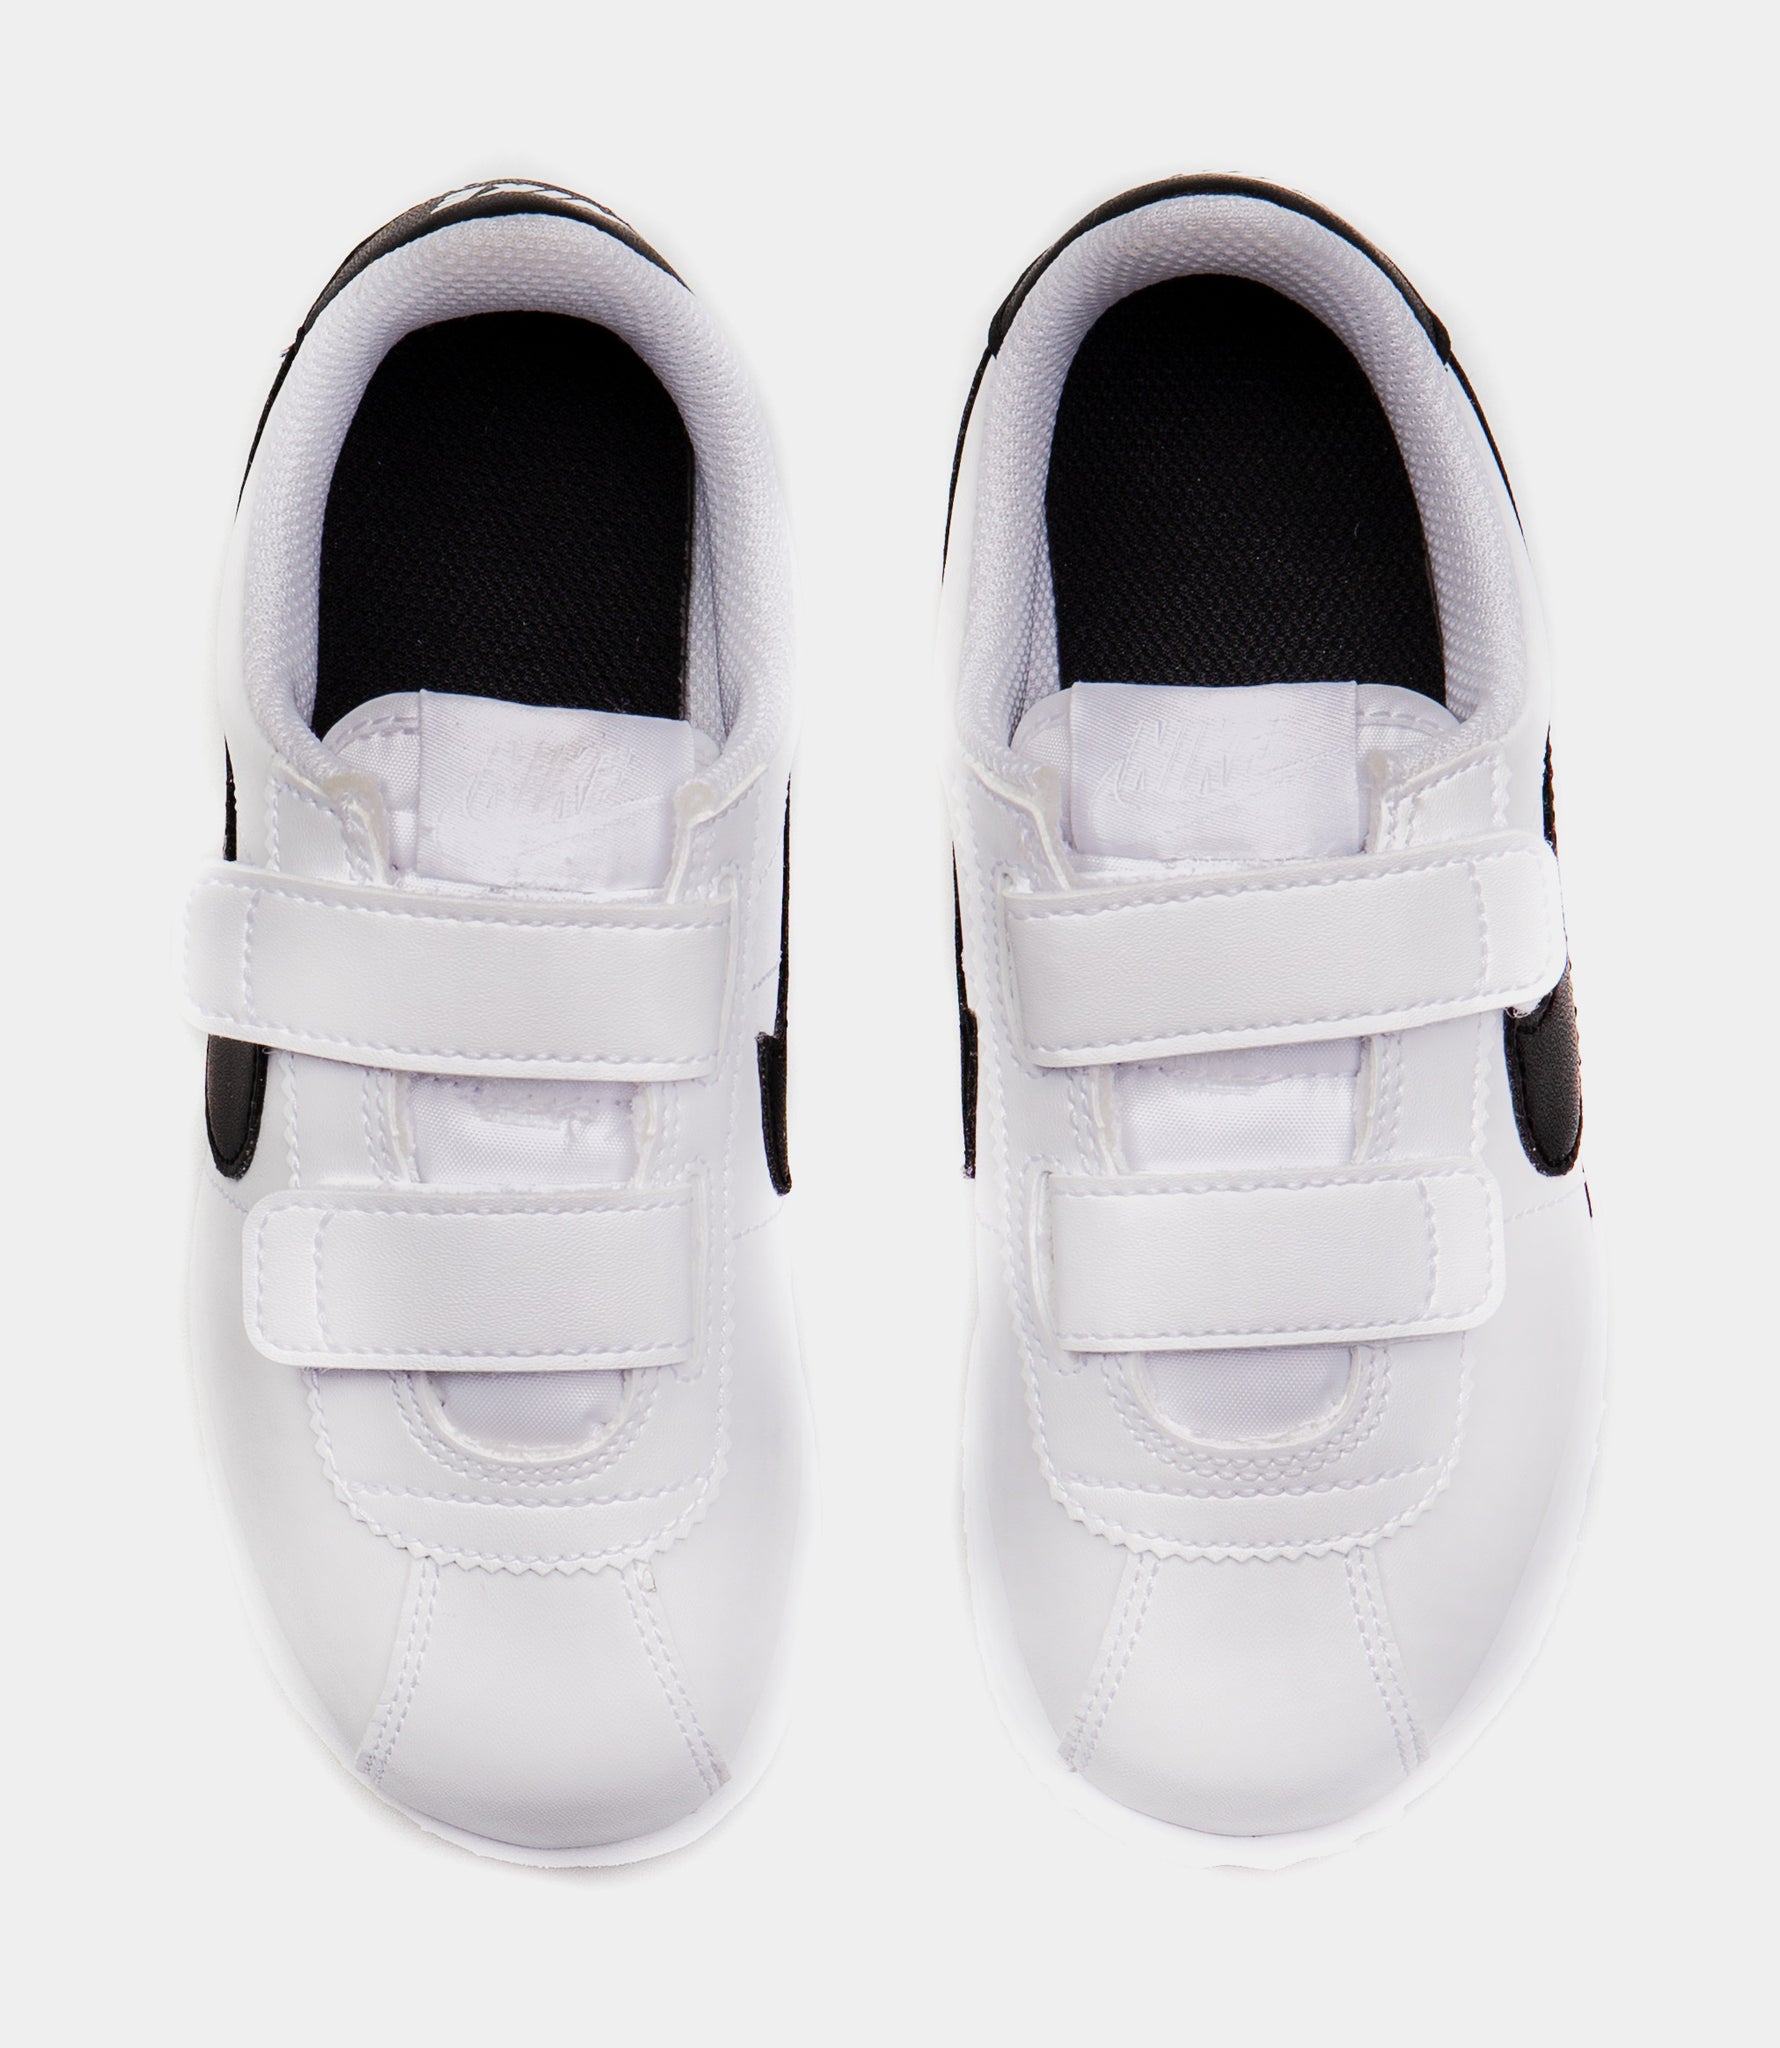 Nike Girls' Preschool Cortez Running Shoes